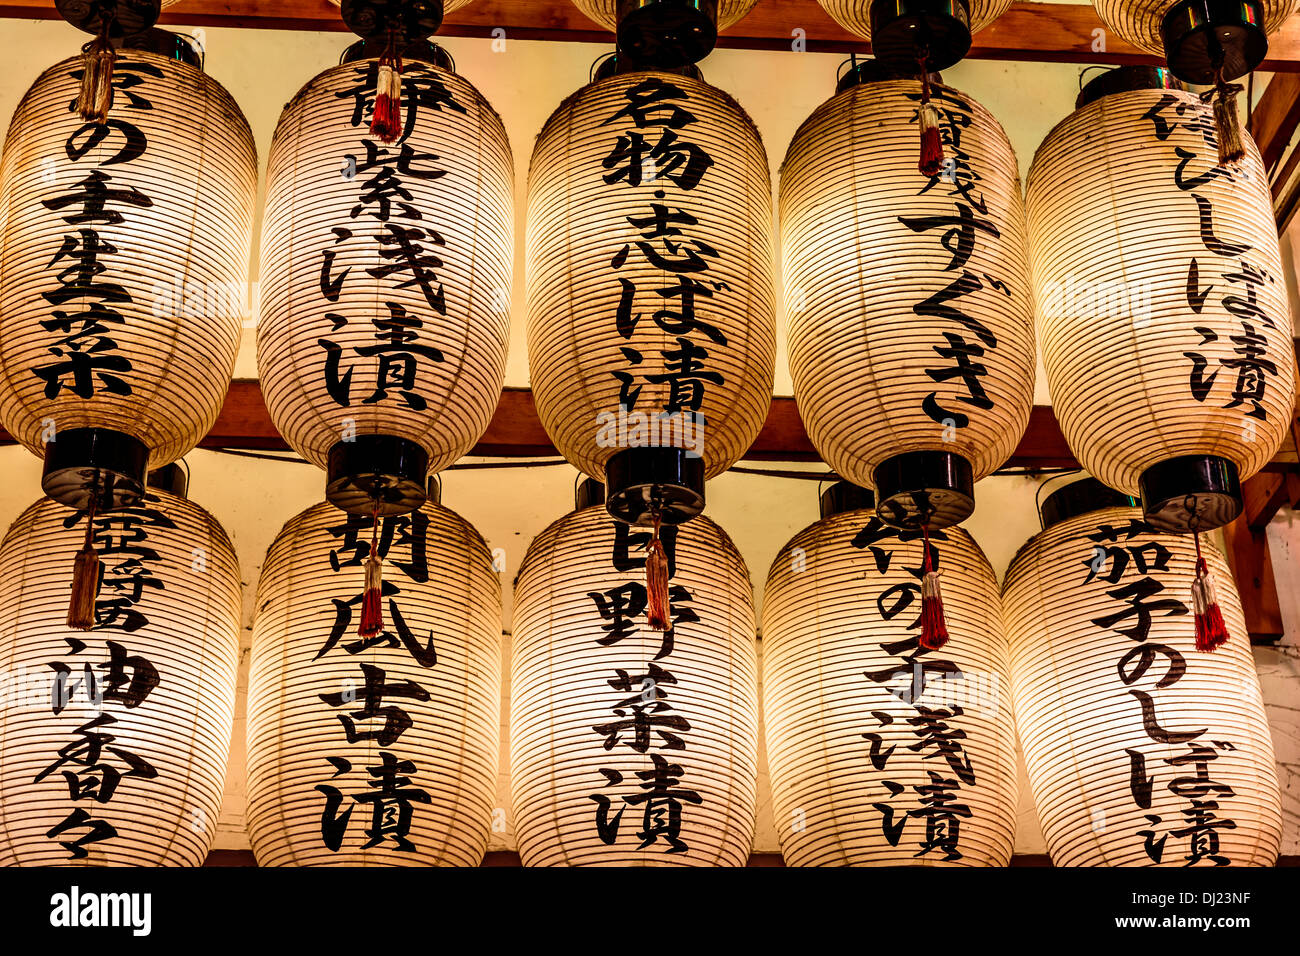 Paper lanterns made of rice paper, Nishiki Market, Kyoto, Japan Stock Photo